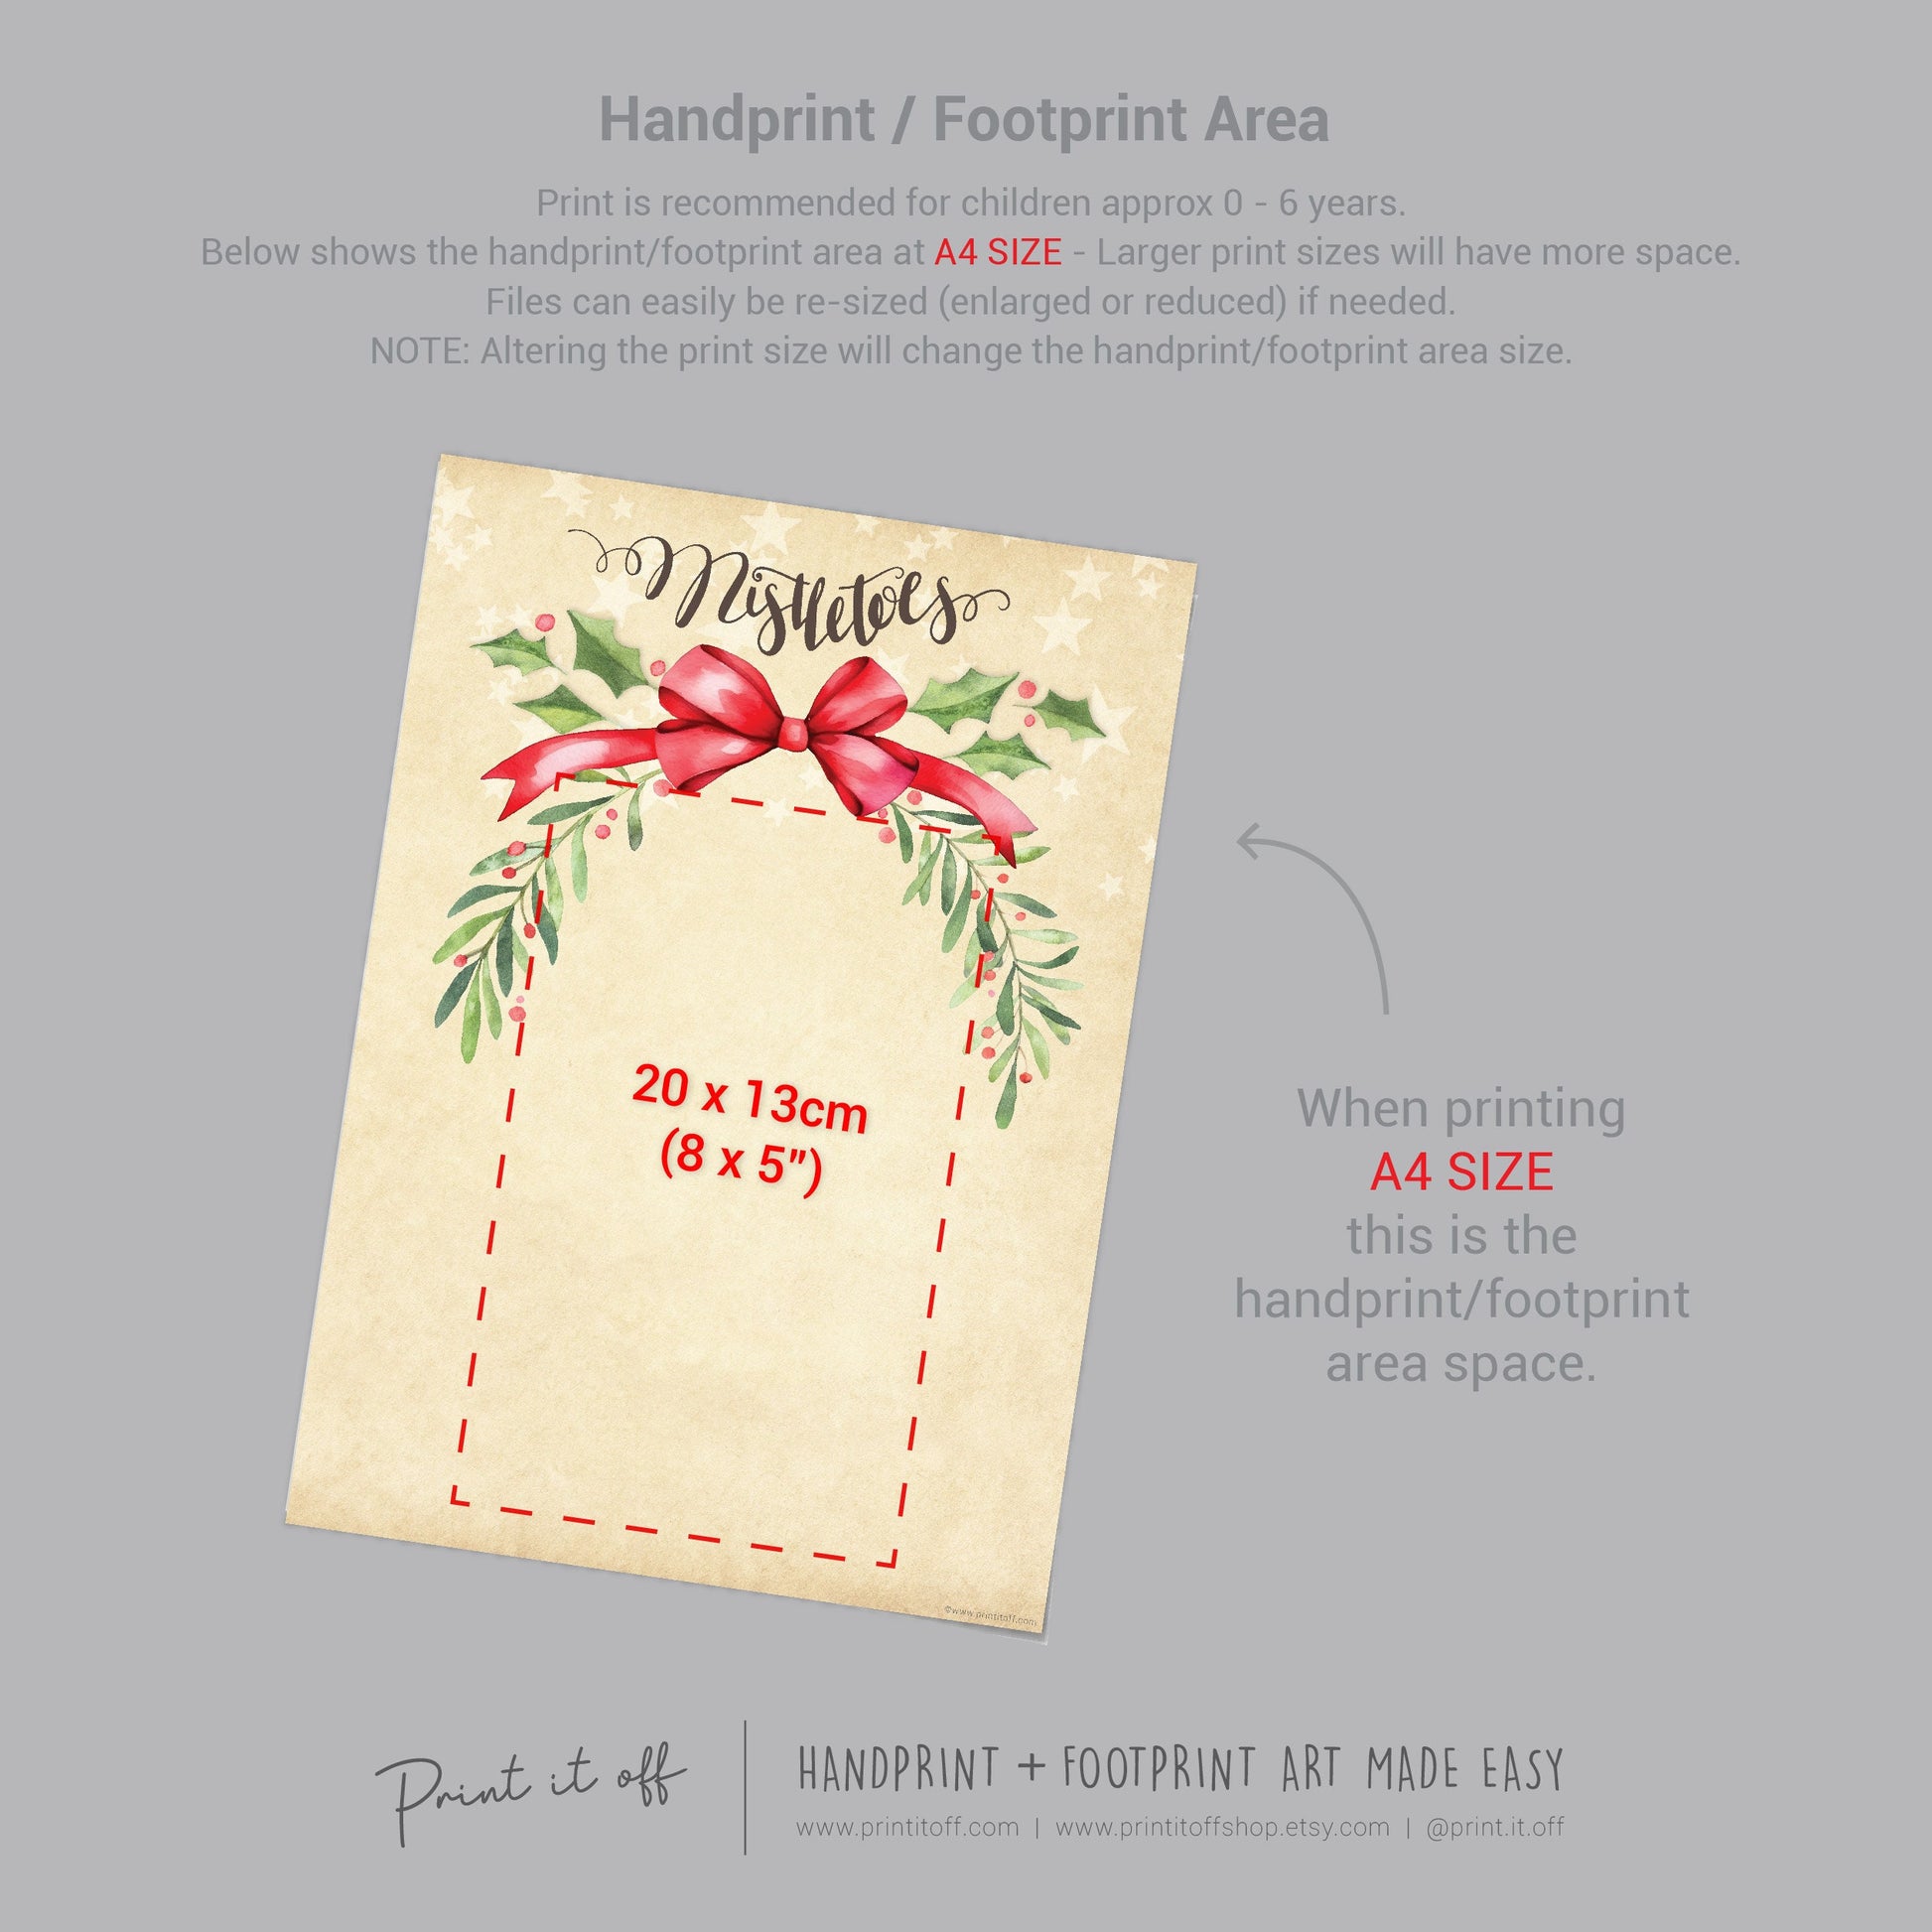 Mistletoes Footprint Foot Feet Art Craft / Christmas Xmas Kids Baby Toddler / Keepsake Gift Card Memory PRINT IT OFF